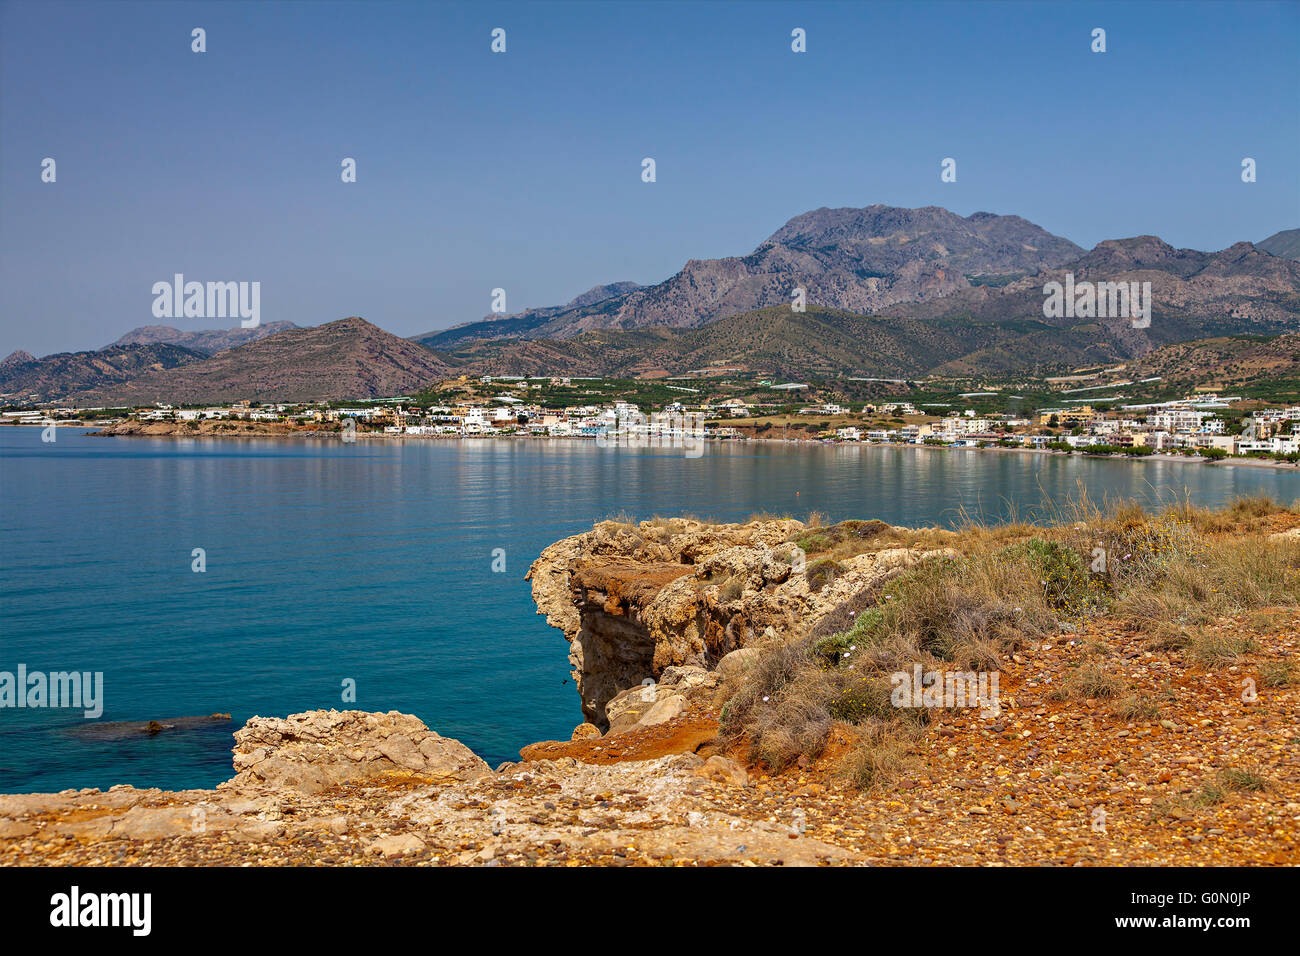 Image of the village of Makrigialos on the south-east coast of Crete, Greece. Stock Photo